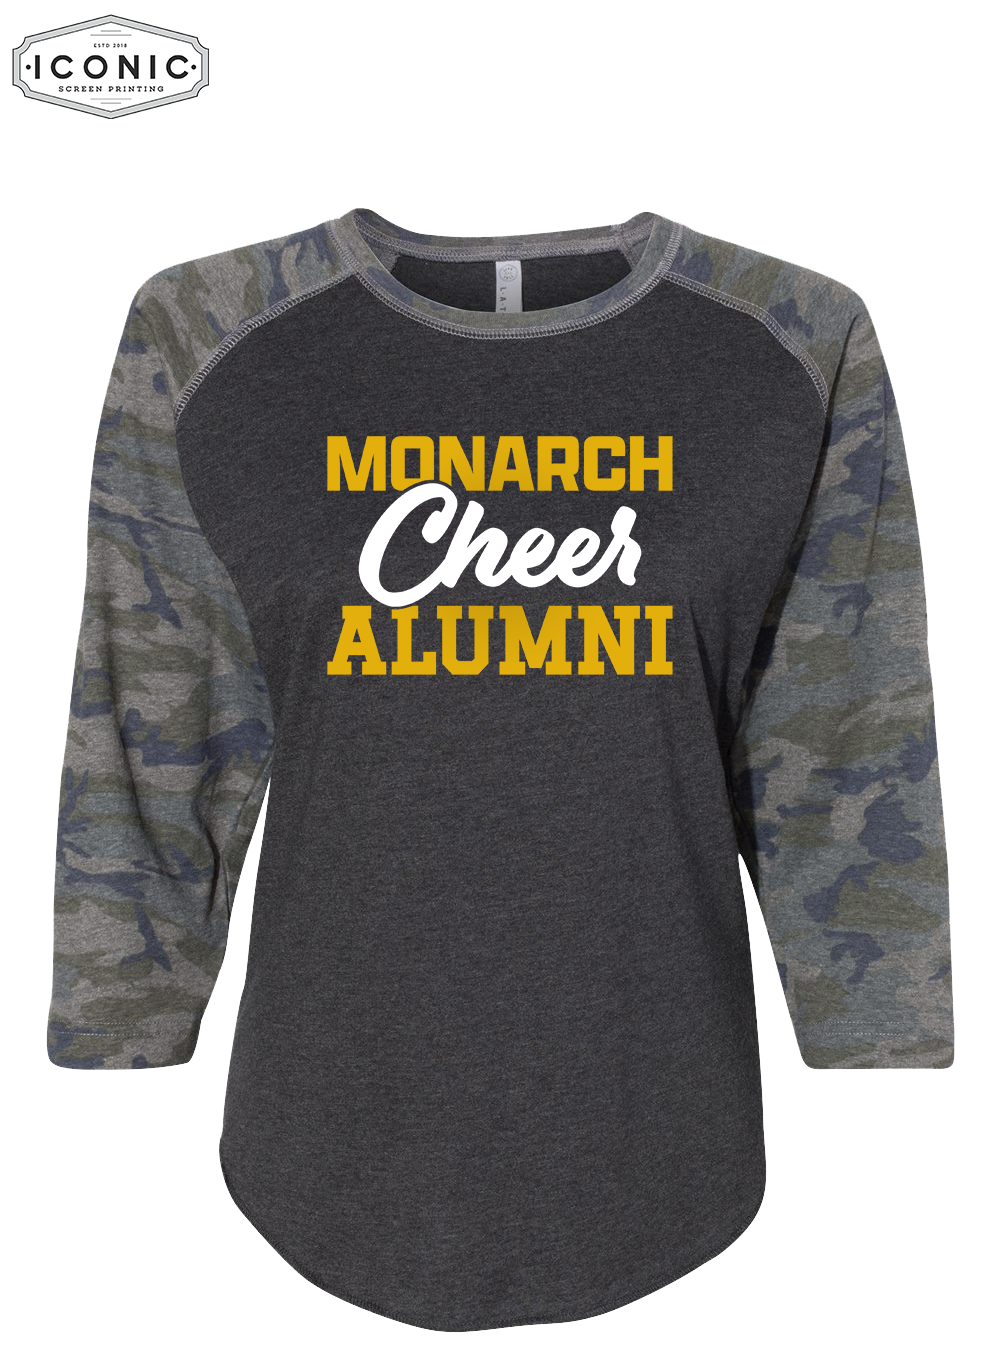 Cheer Alumni - Women's Baseball Jersey 3/4 Sleeve